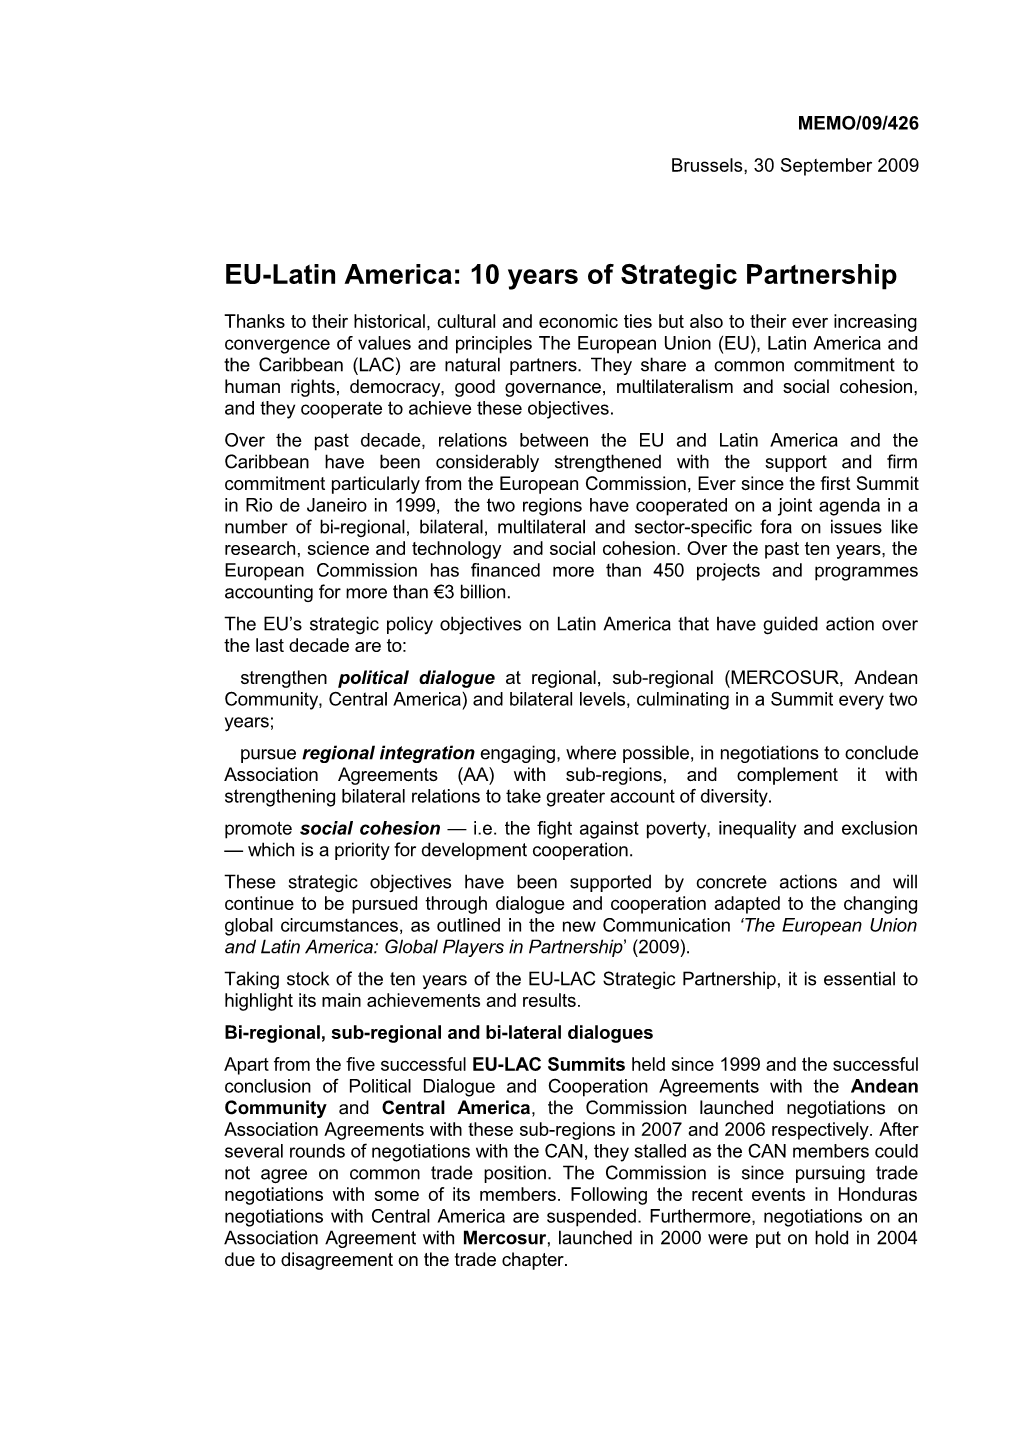 EU-Latin America 10 Years of Strategic Partnership an Overview